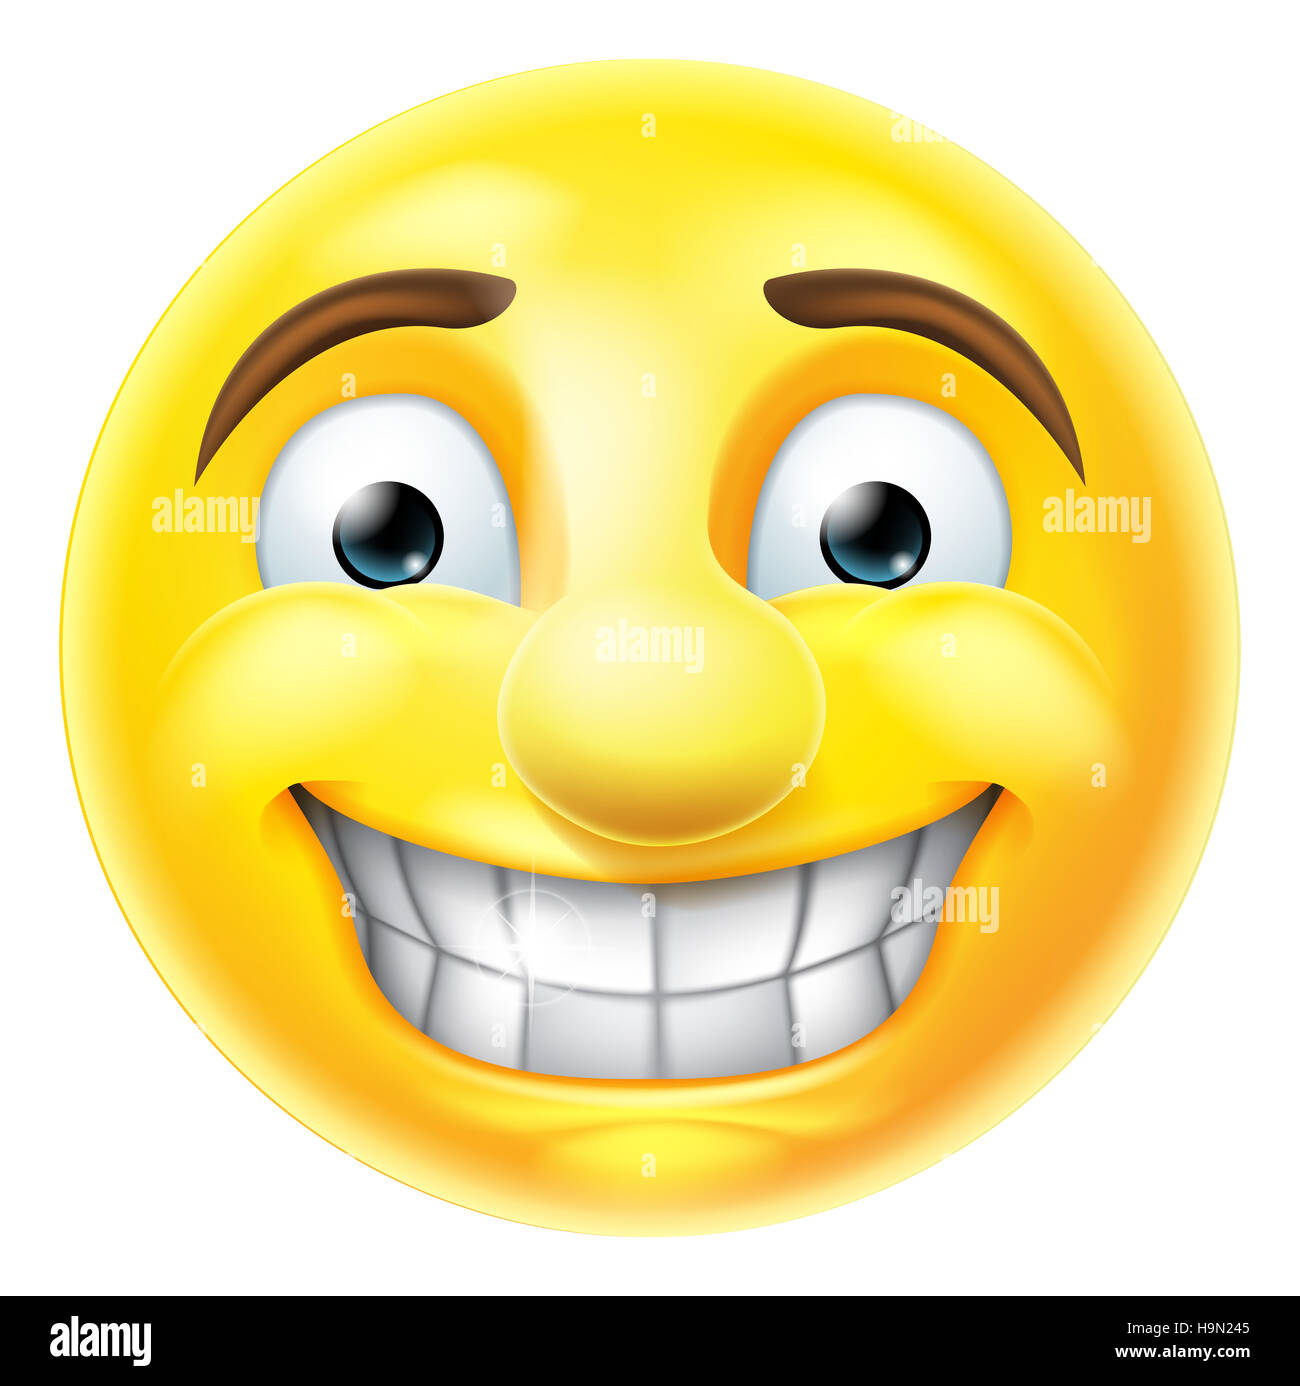 Cartoon emoji emoticon smiling smiley face character Stock Photo - Alamy